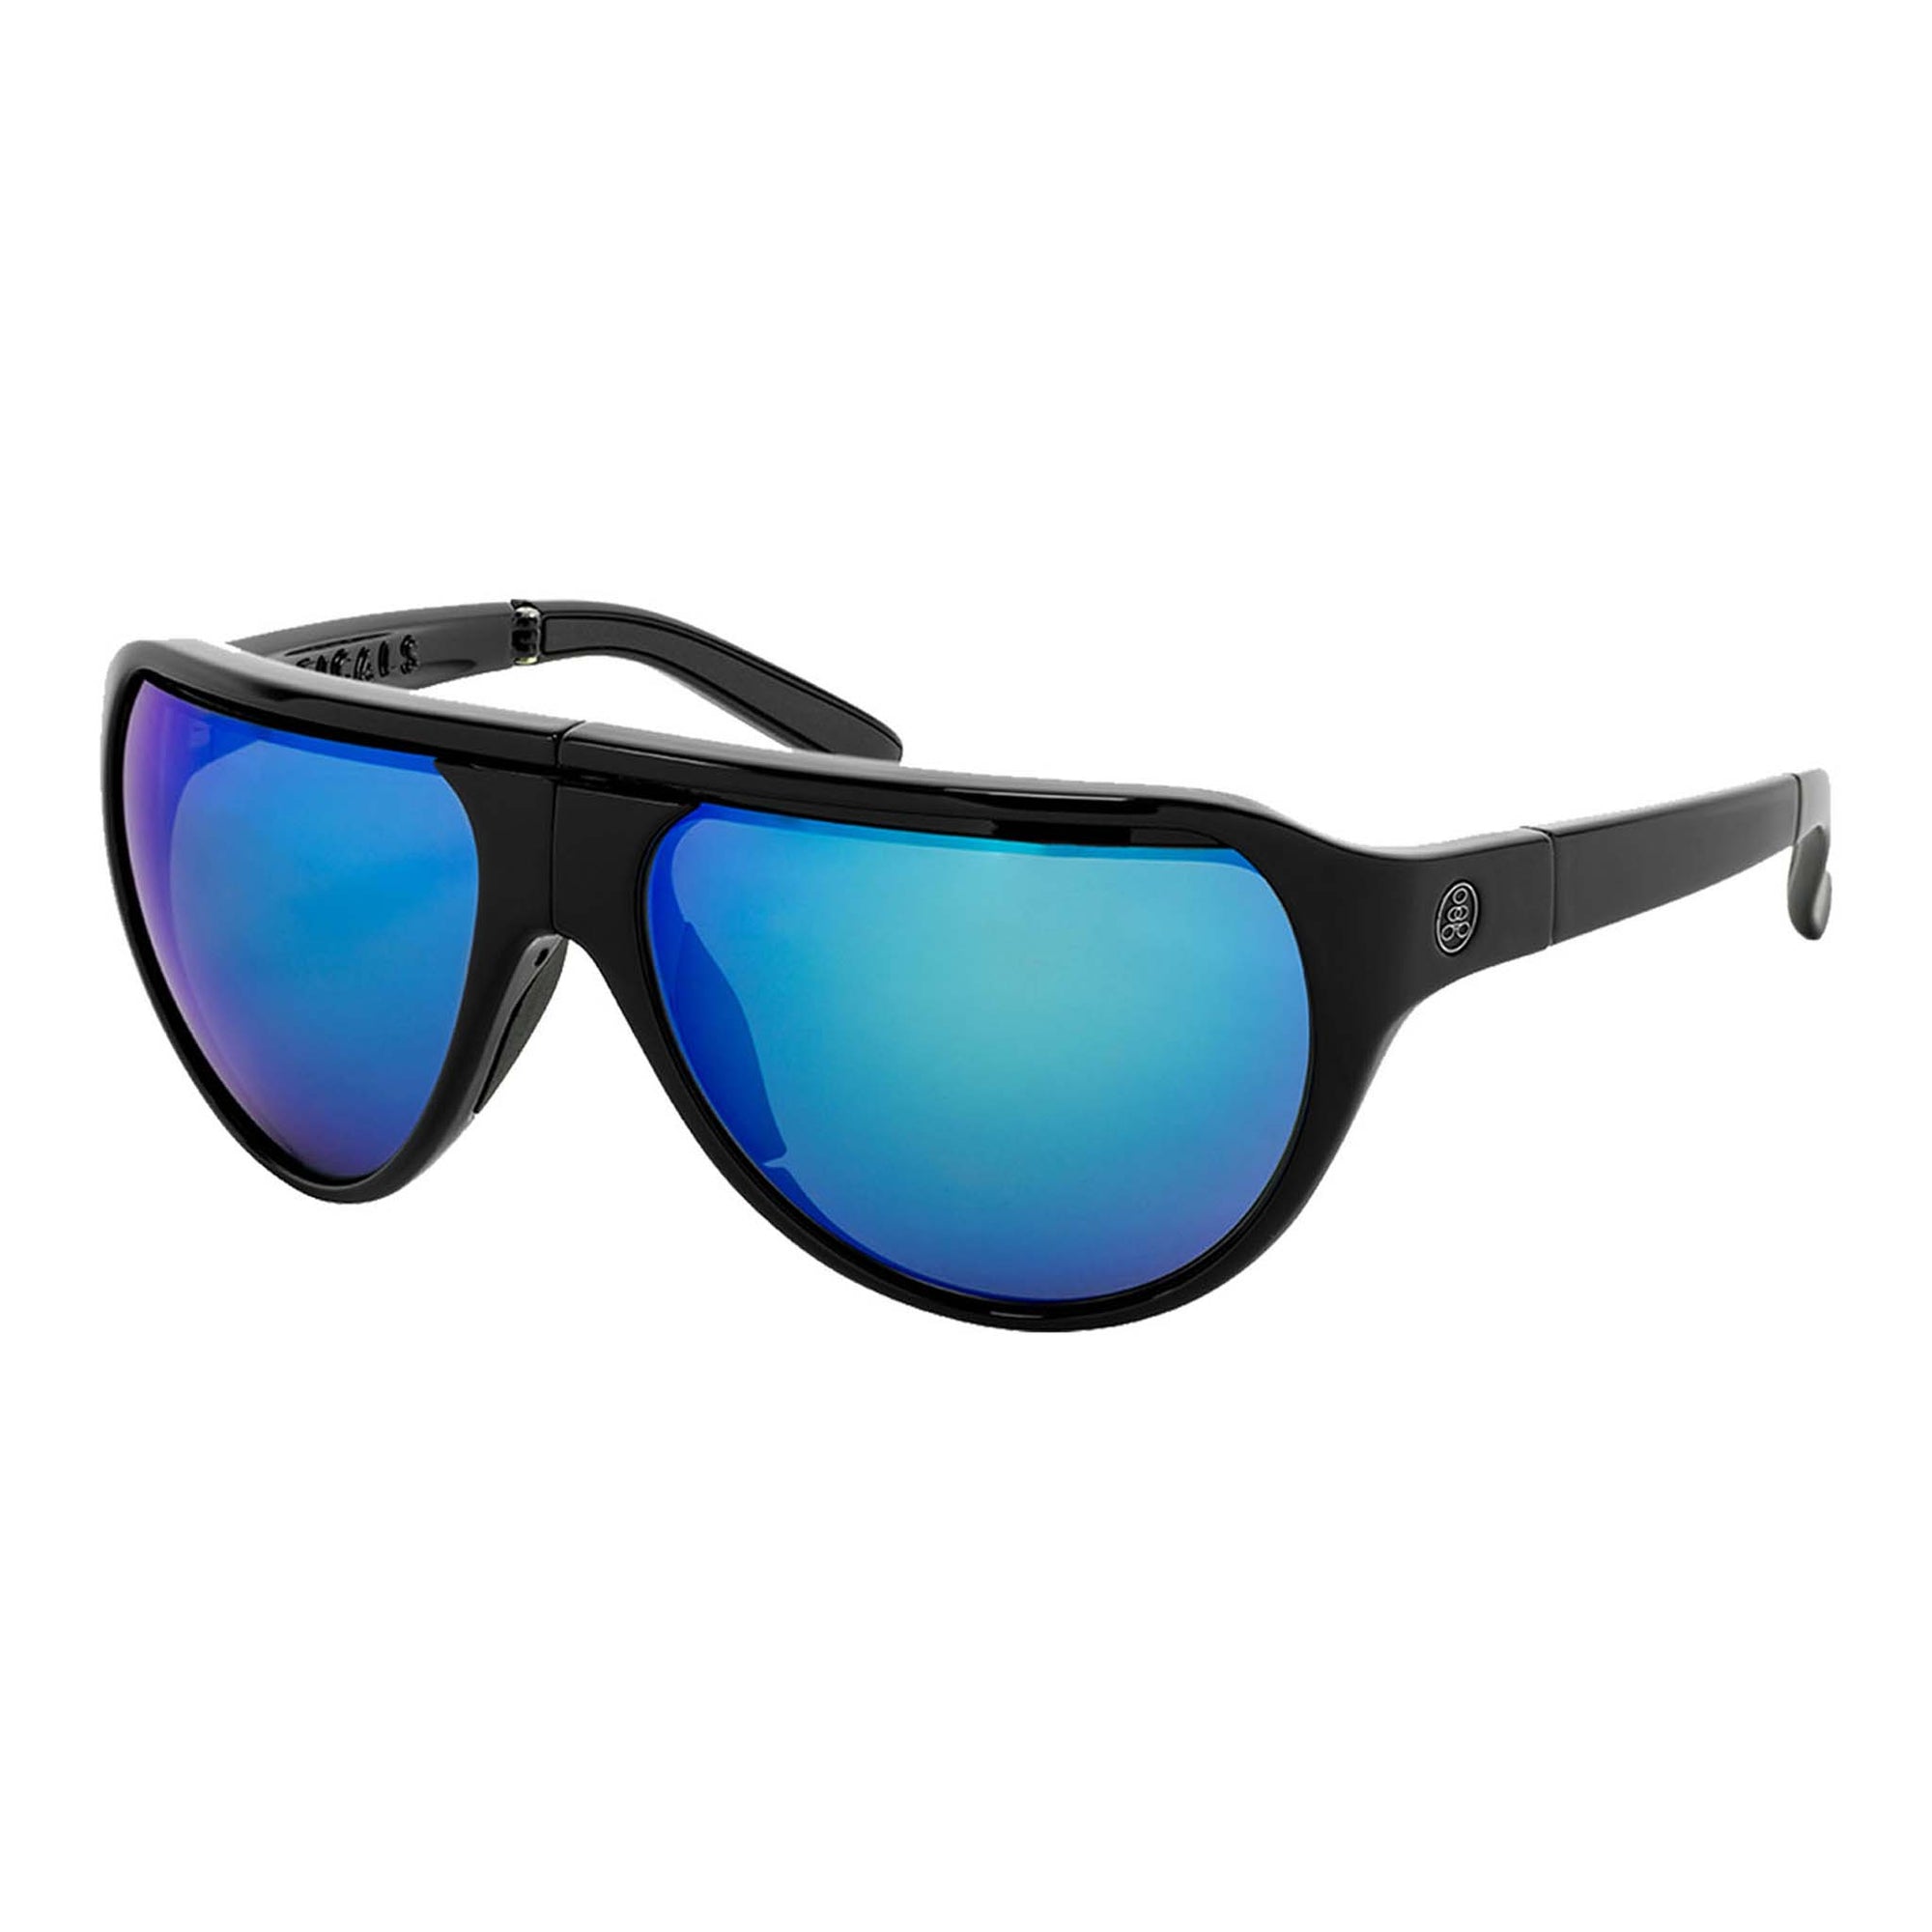 Popticals, Premium Compact Sunglasses, PopAir, 300010-BGUN, Polarized Sunglasses, Gloss Black Frame, Gray Lenses with Blue Mirror Finish, Glam View